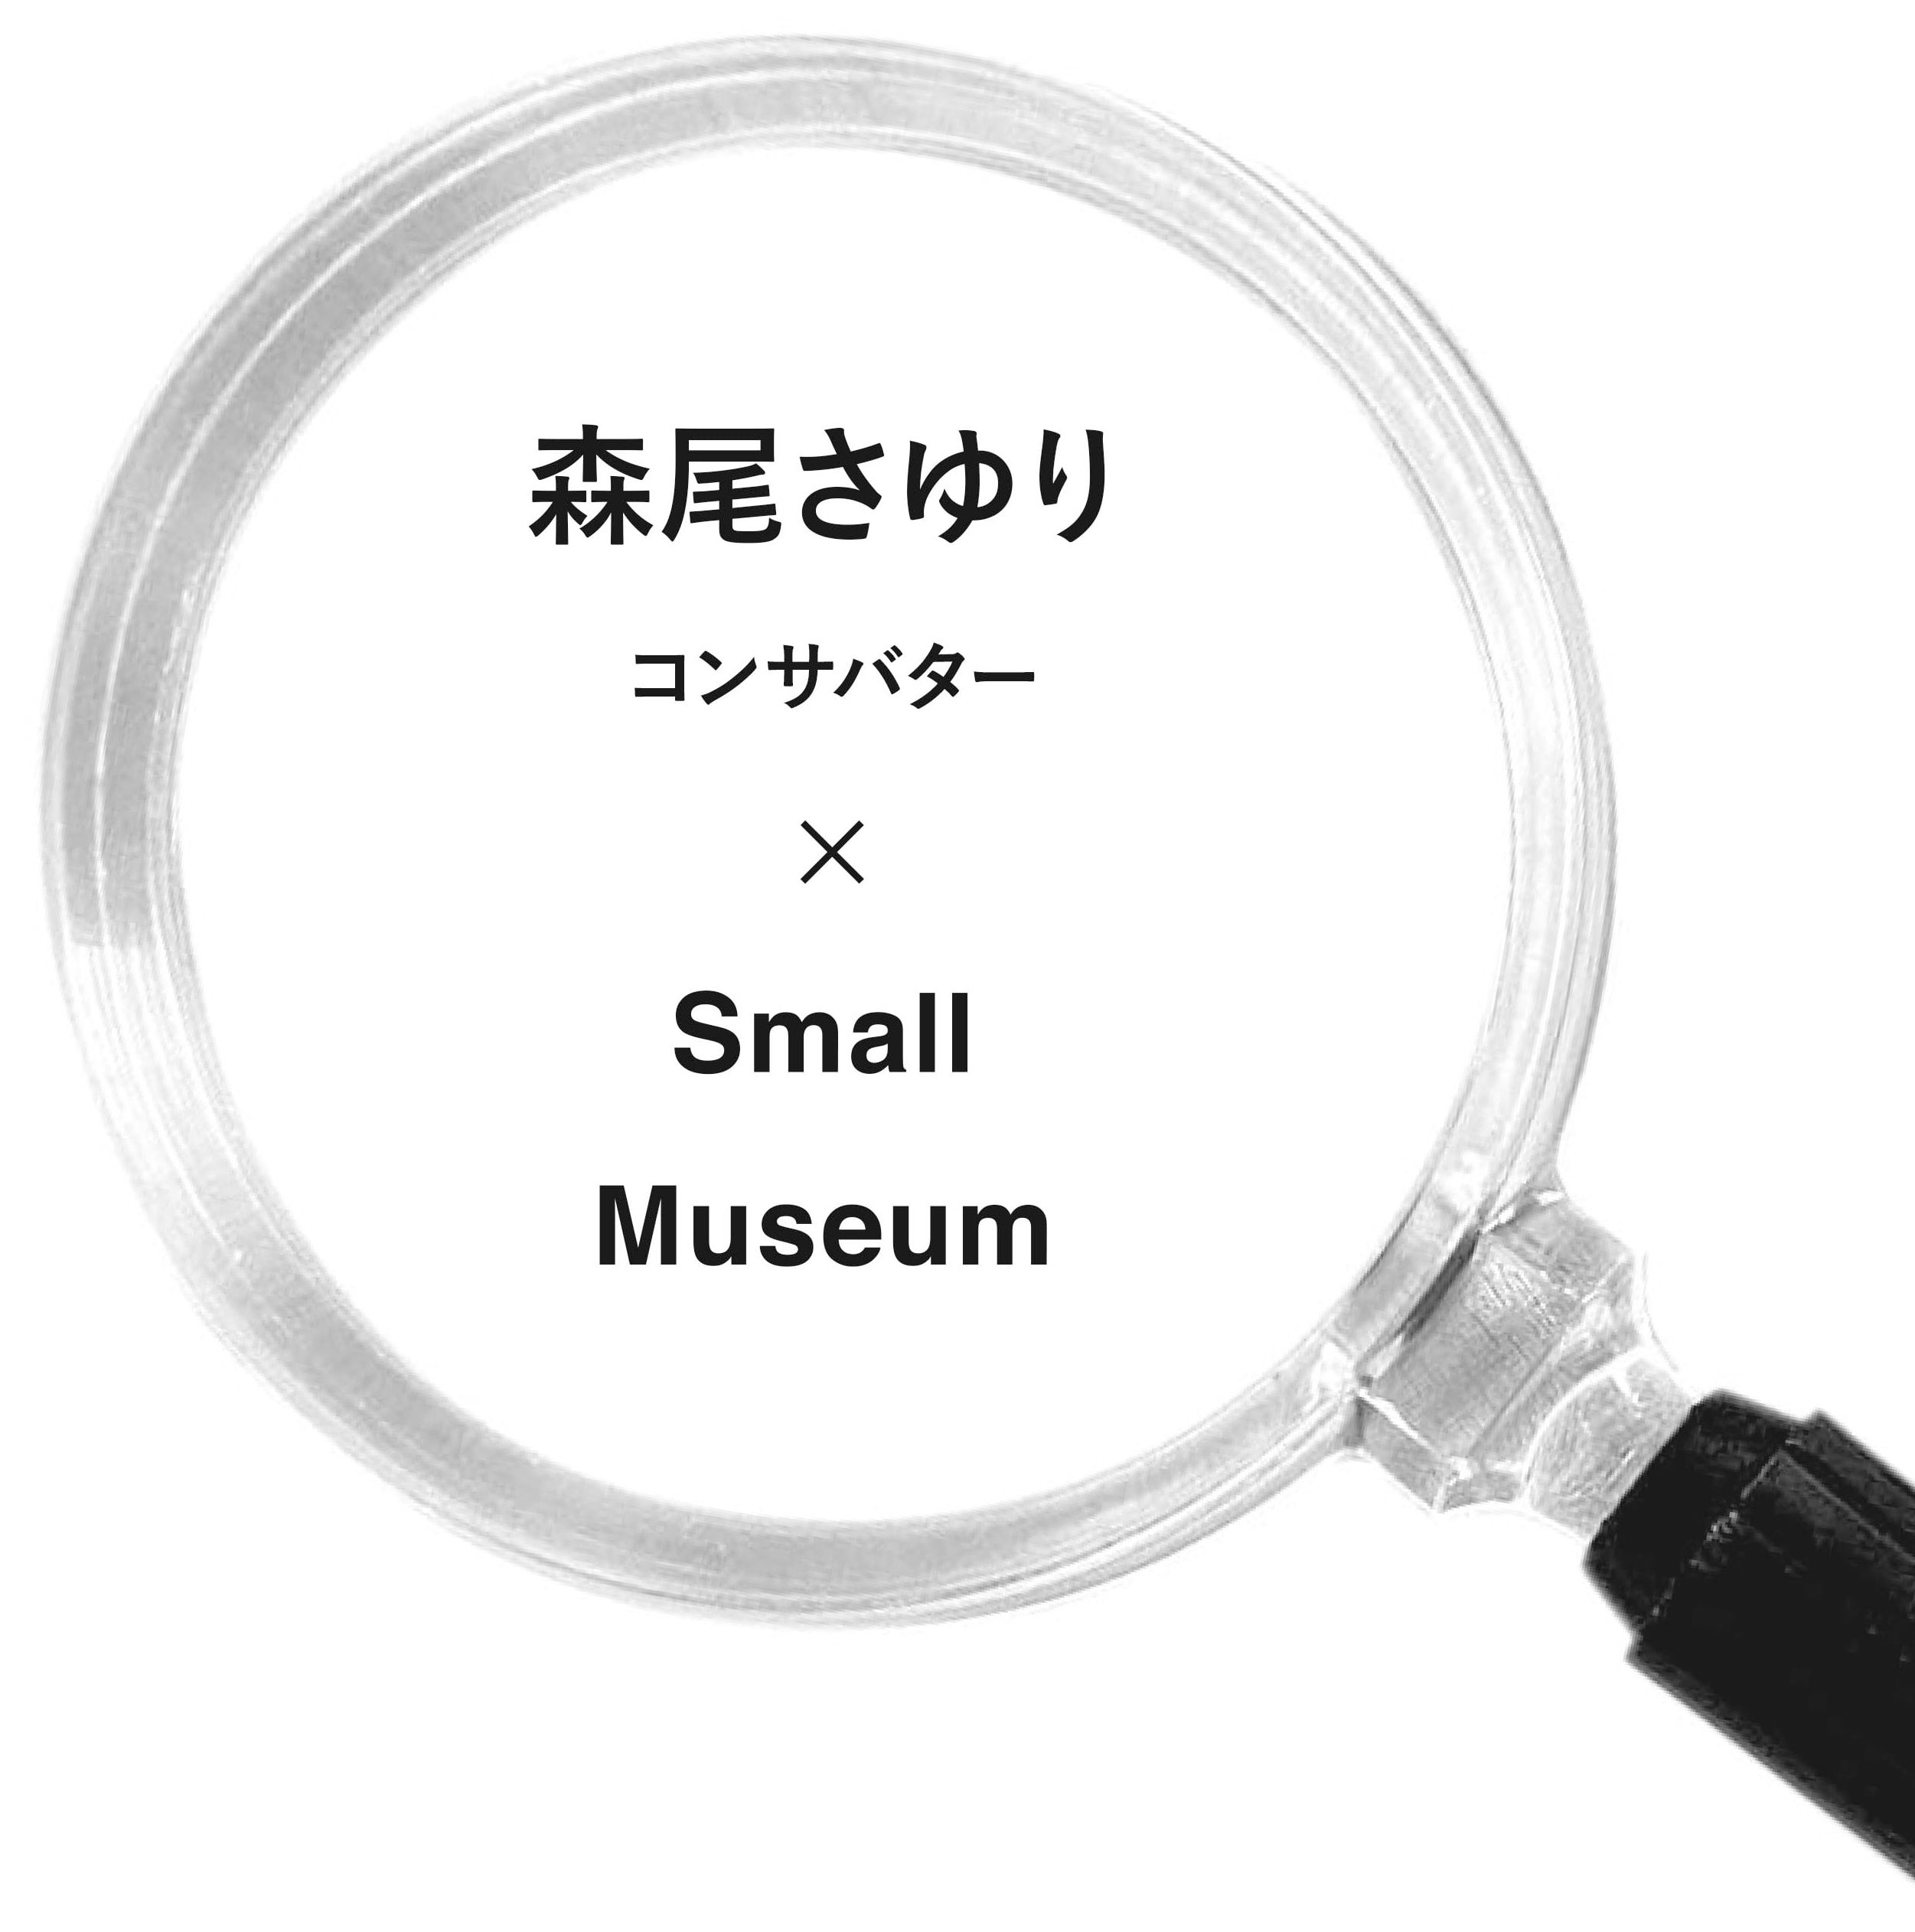 Small Museum 出張作品撮影 × コンサバター森尾さゆり at ポプリホール